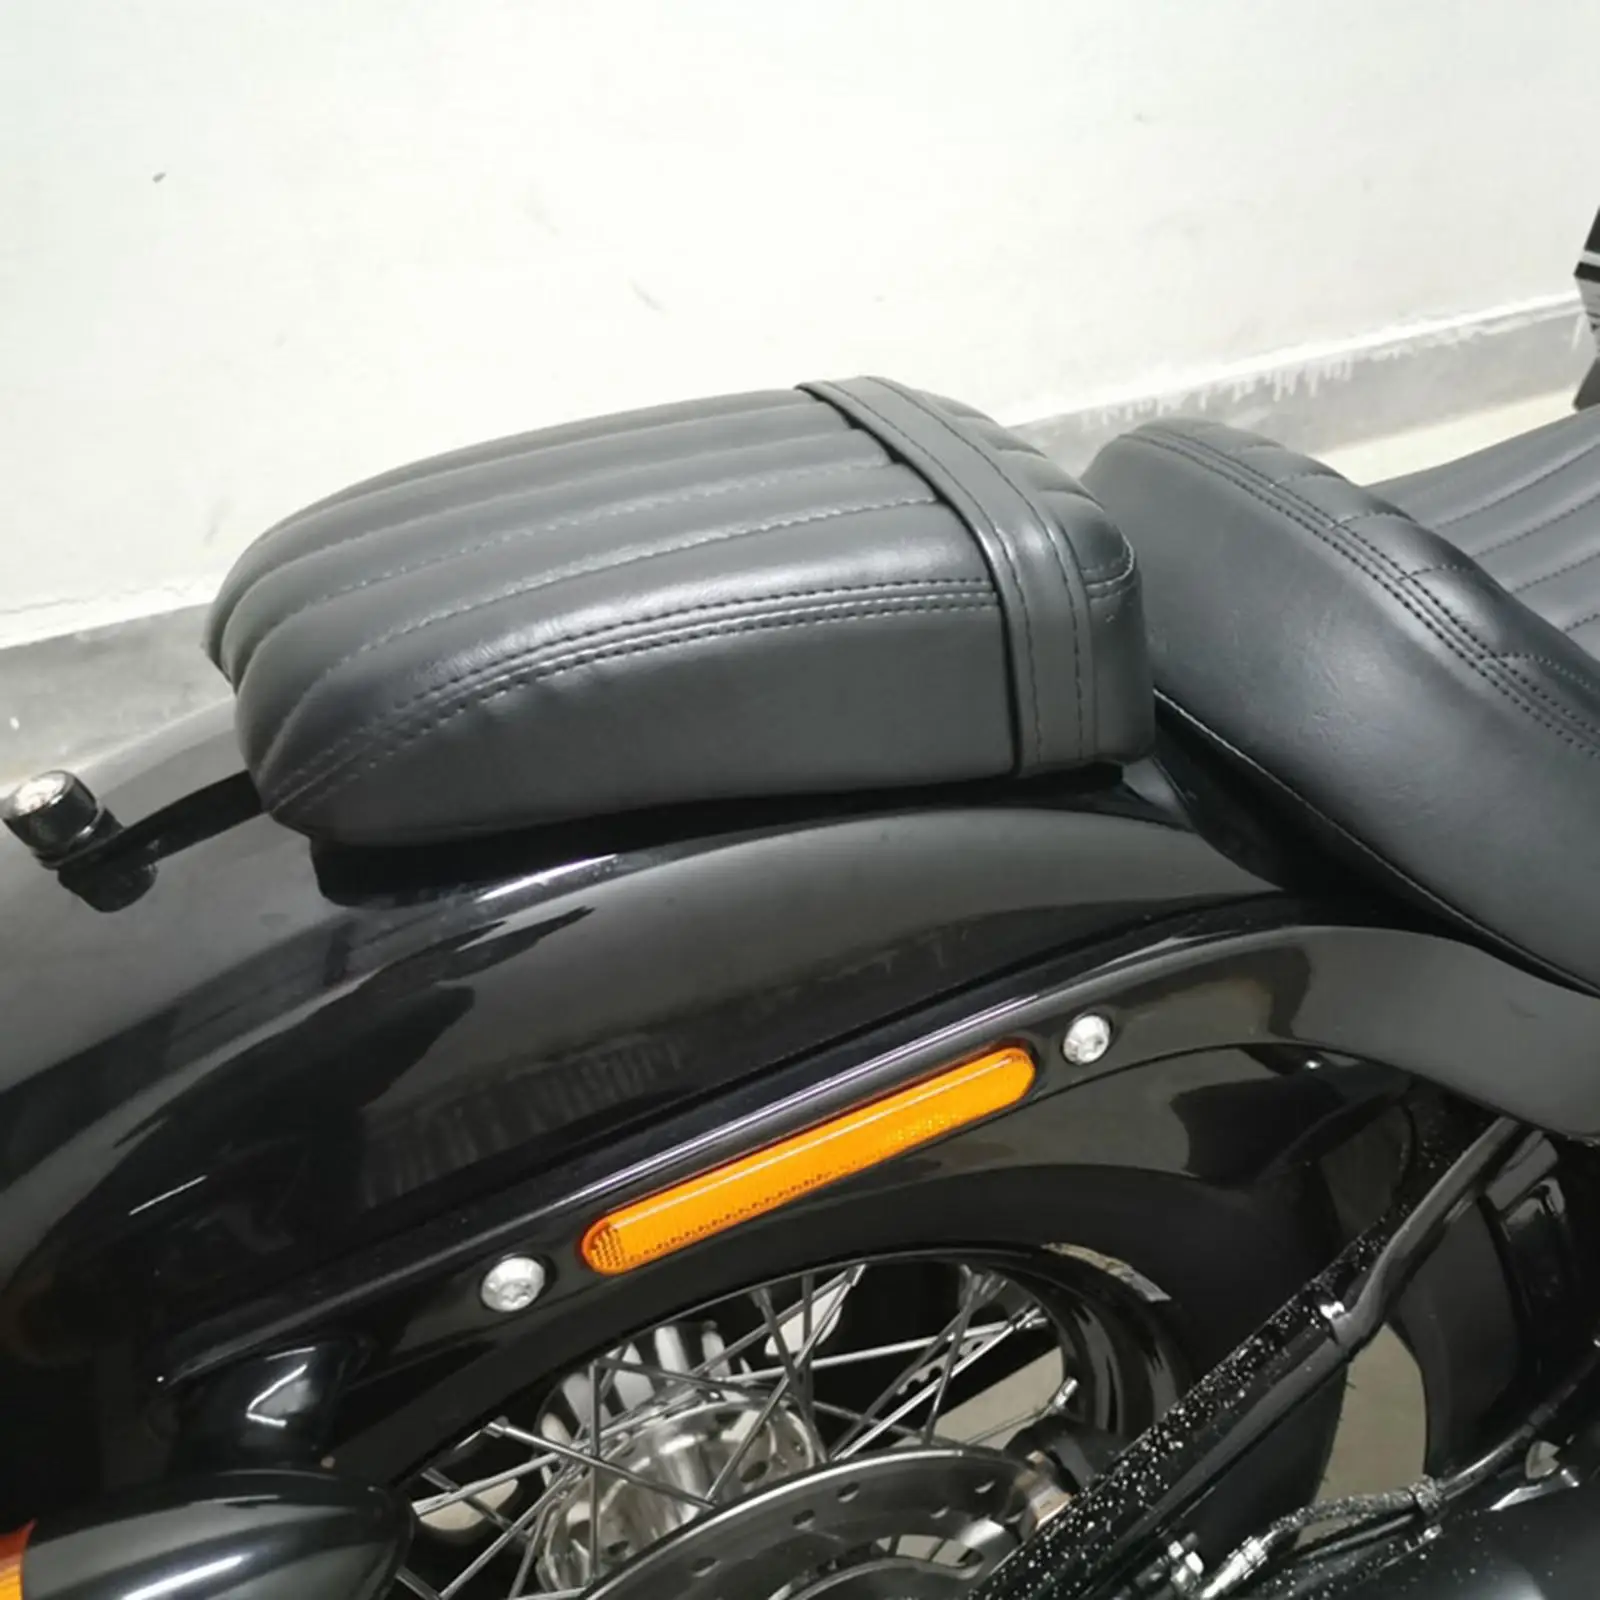 Motorcycle Rear Cushion Passenger Seat Cushion for  Street Bob